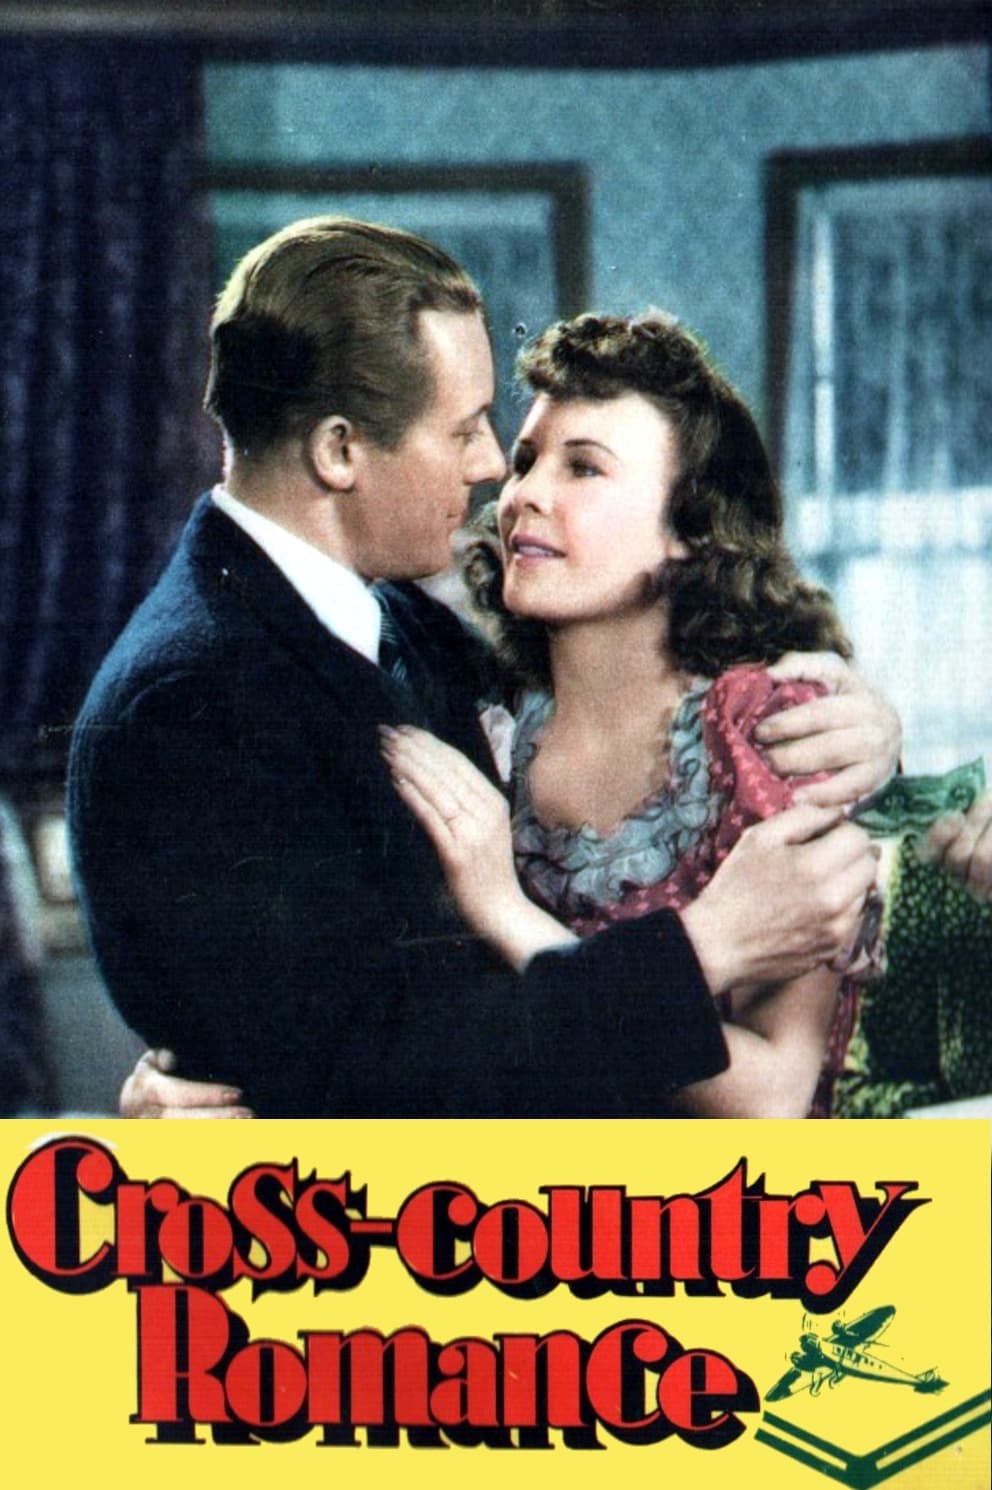 Cross-Country Romance (1940)